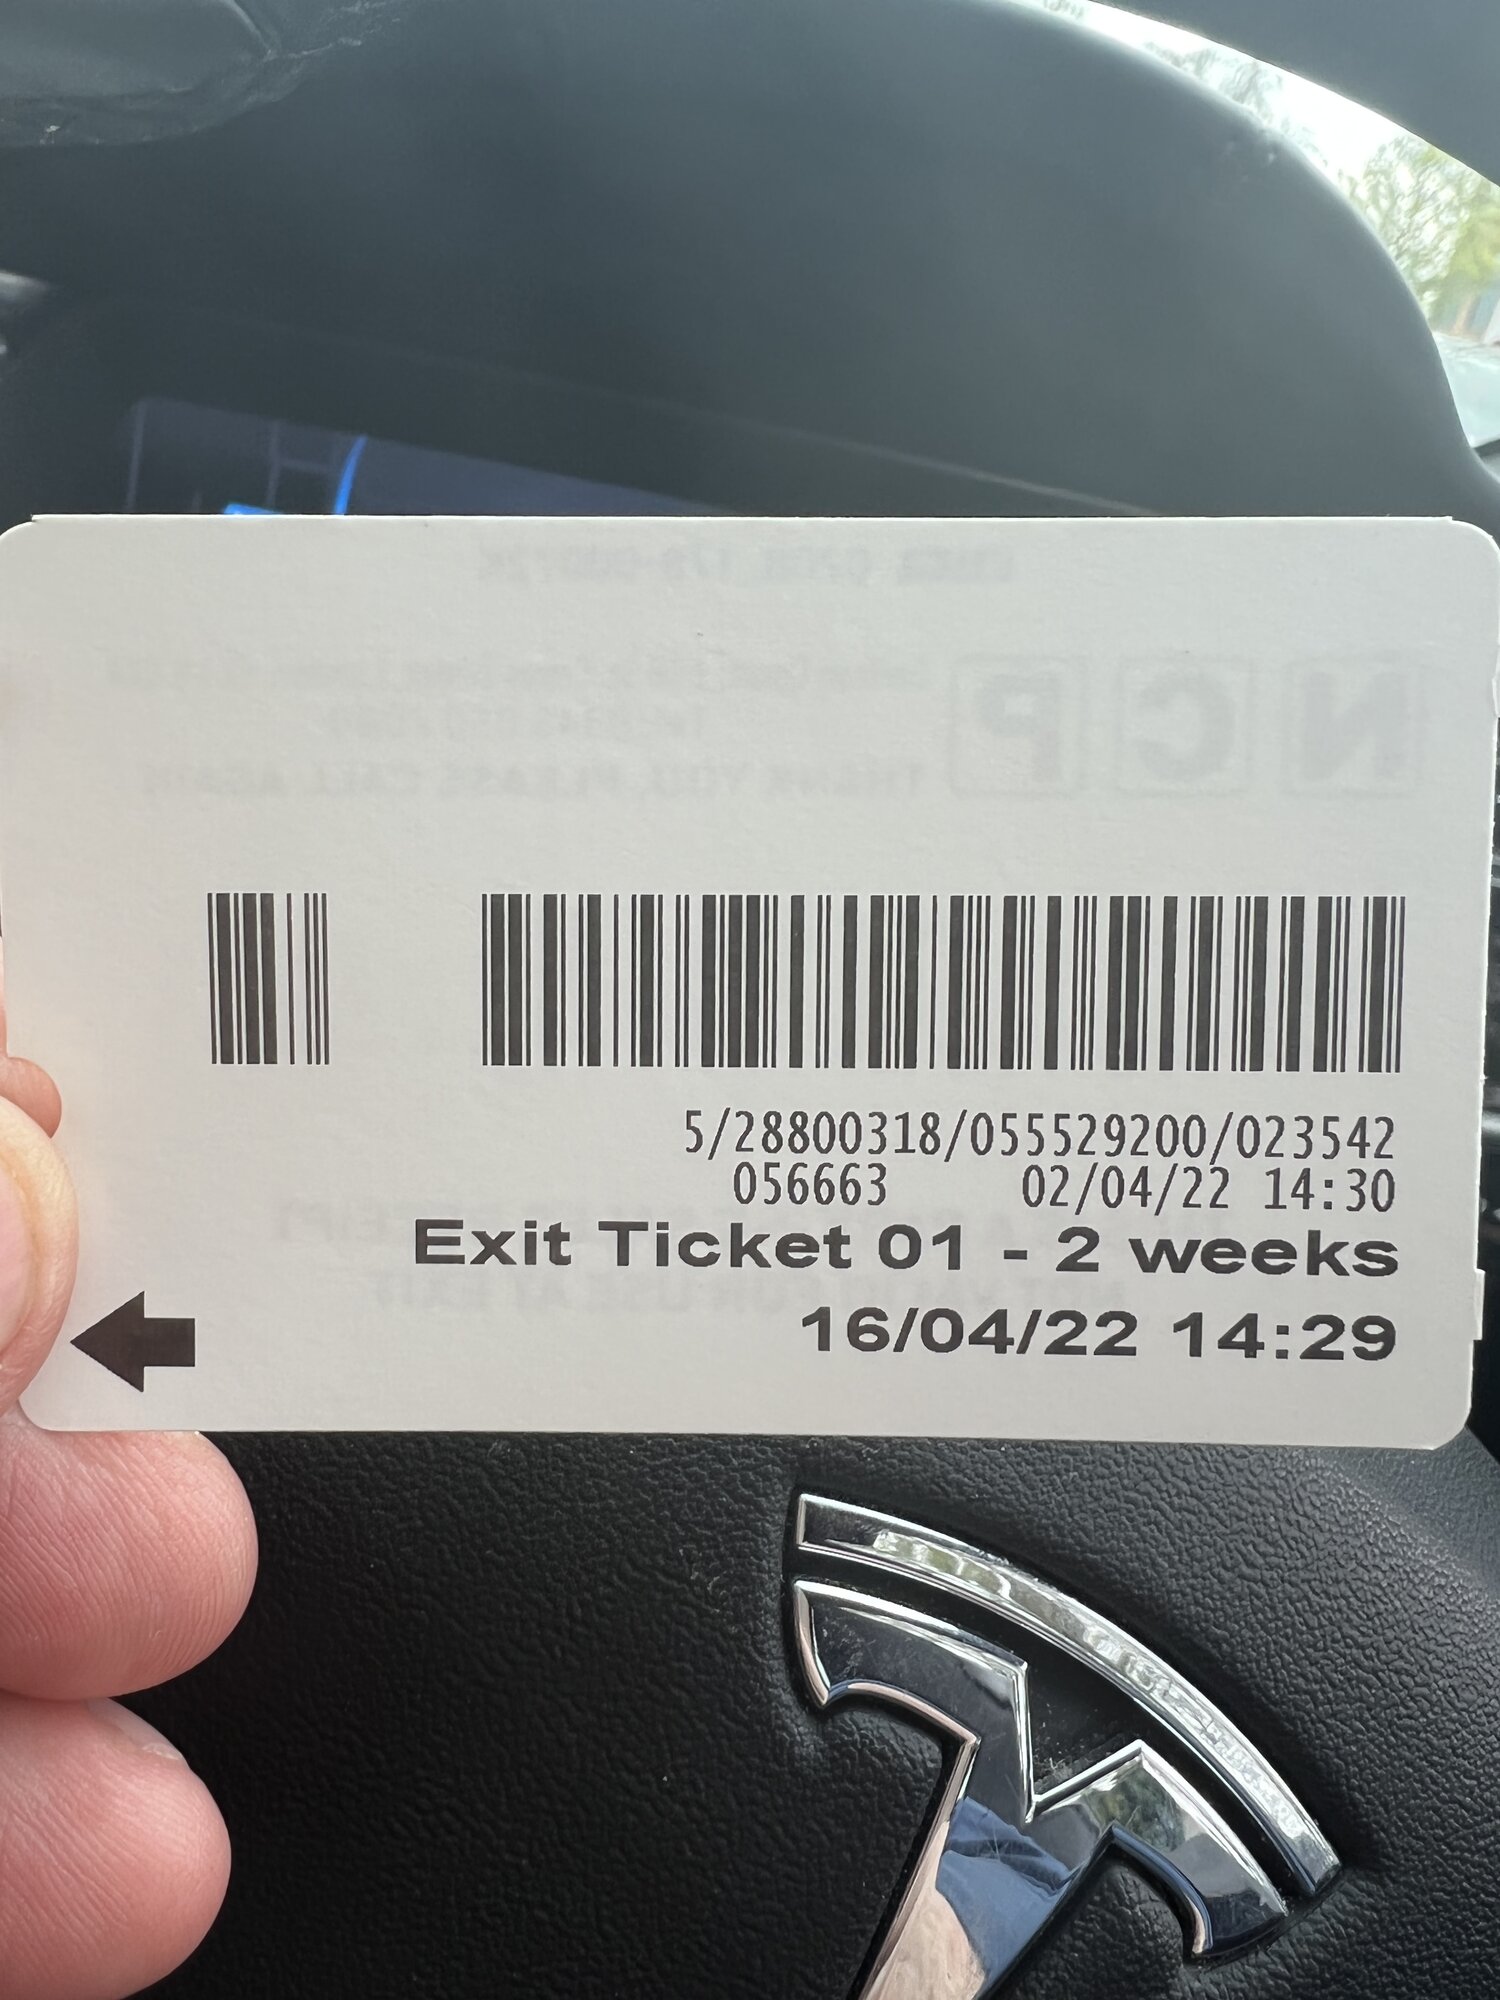 Heathrow Hilton parking ticket.JPG